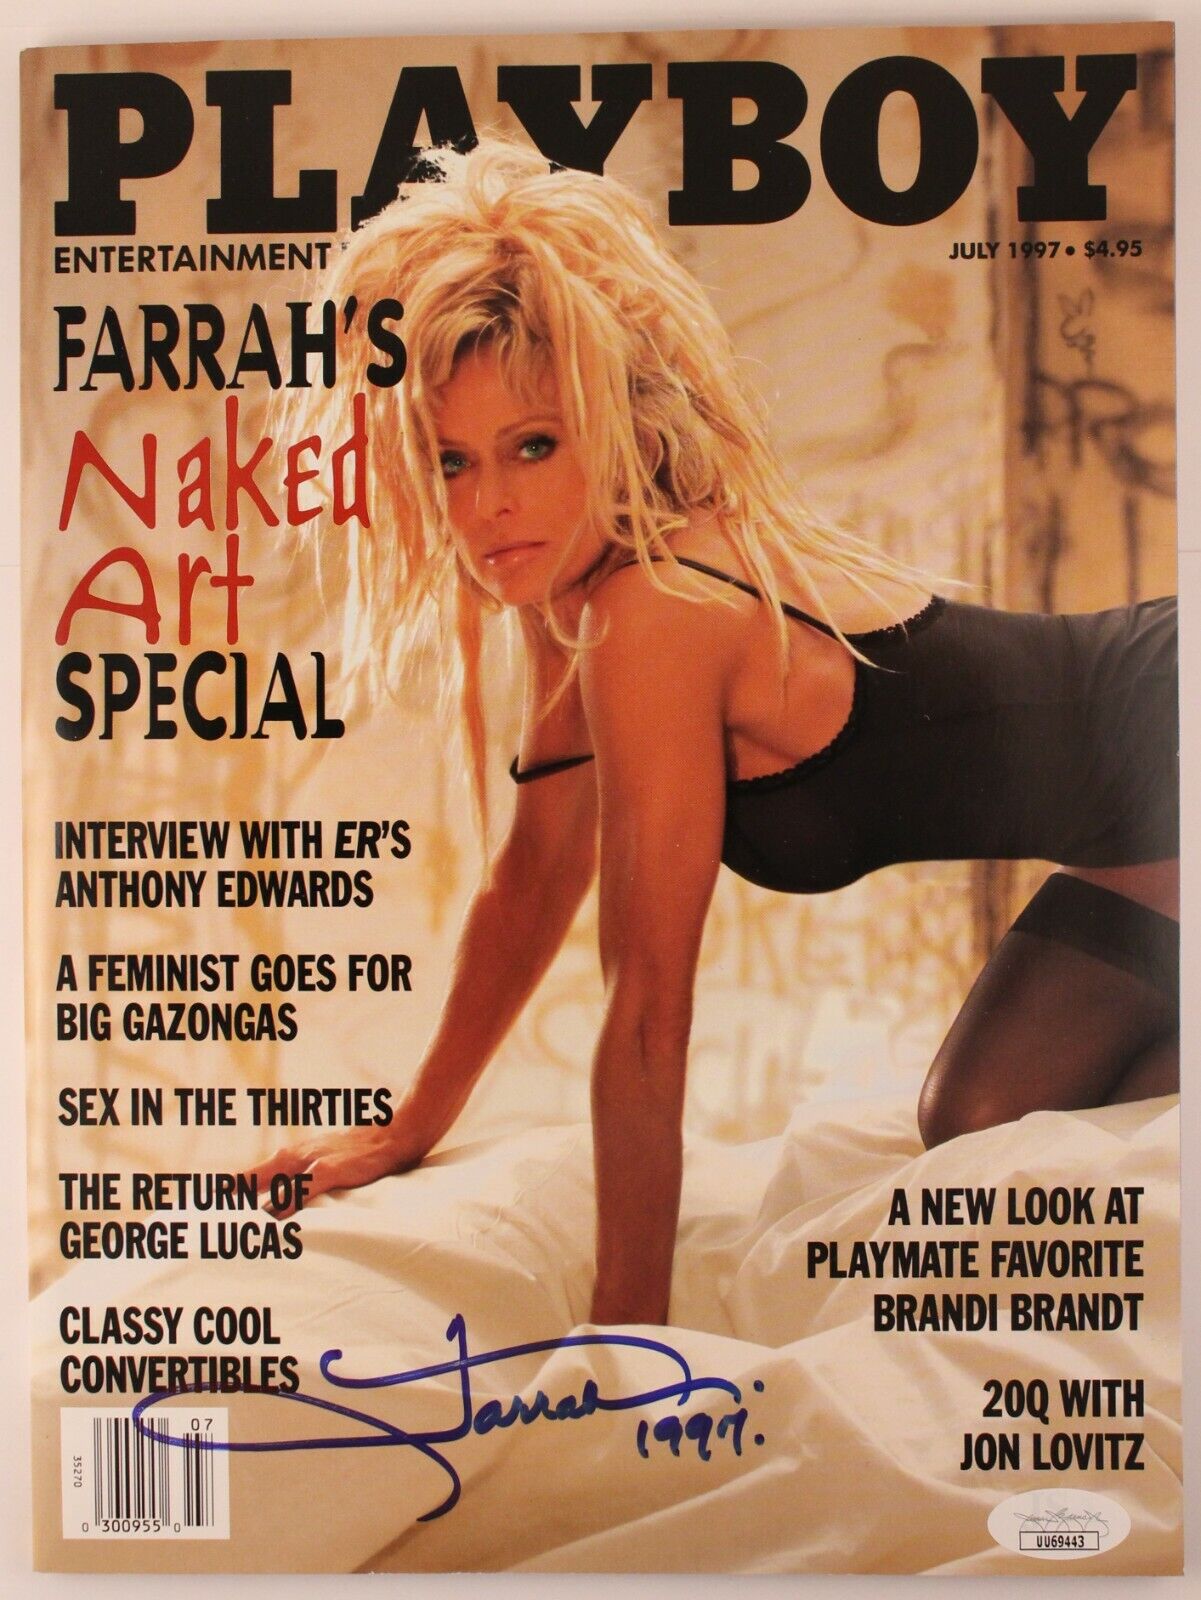 Farrah Fawcett Signed Playboy Magazine July 1997 JSA Authenticated Rare